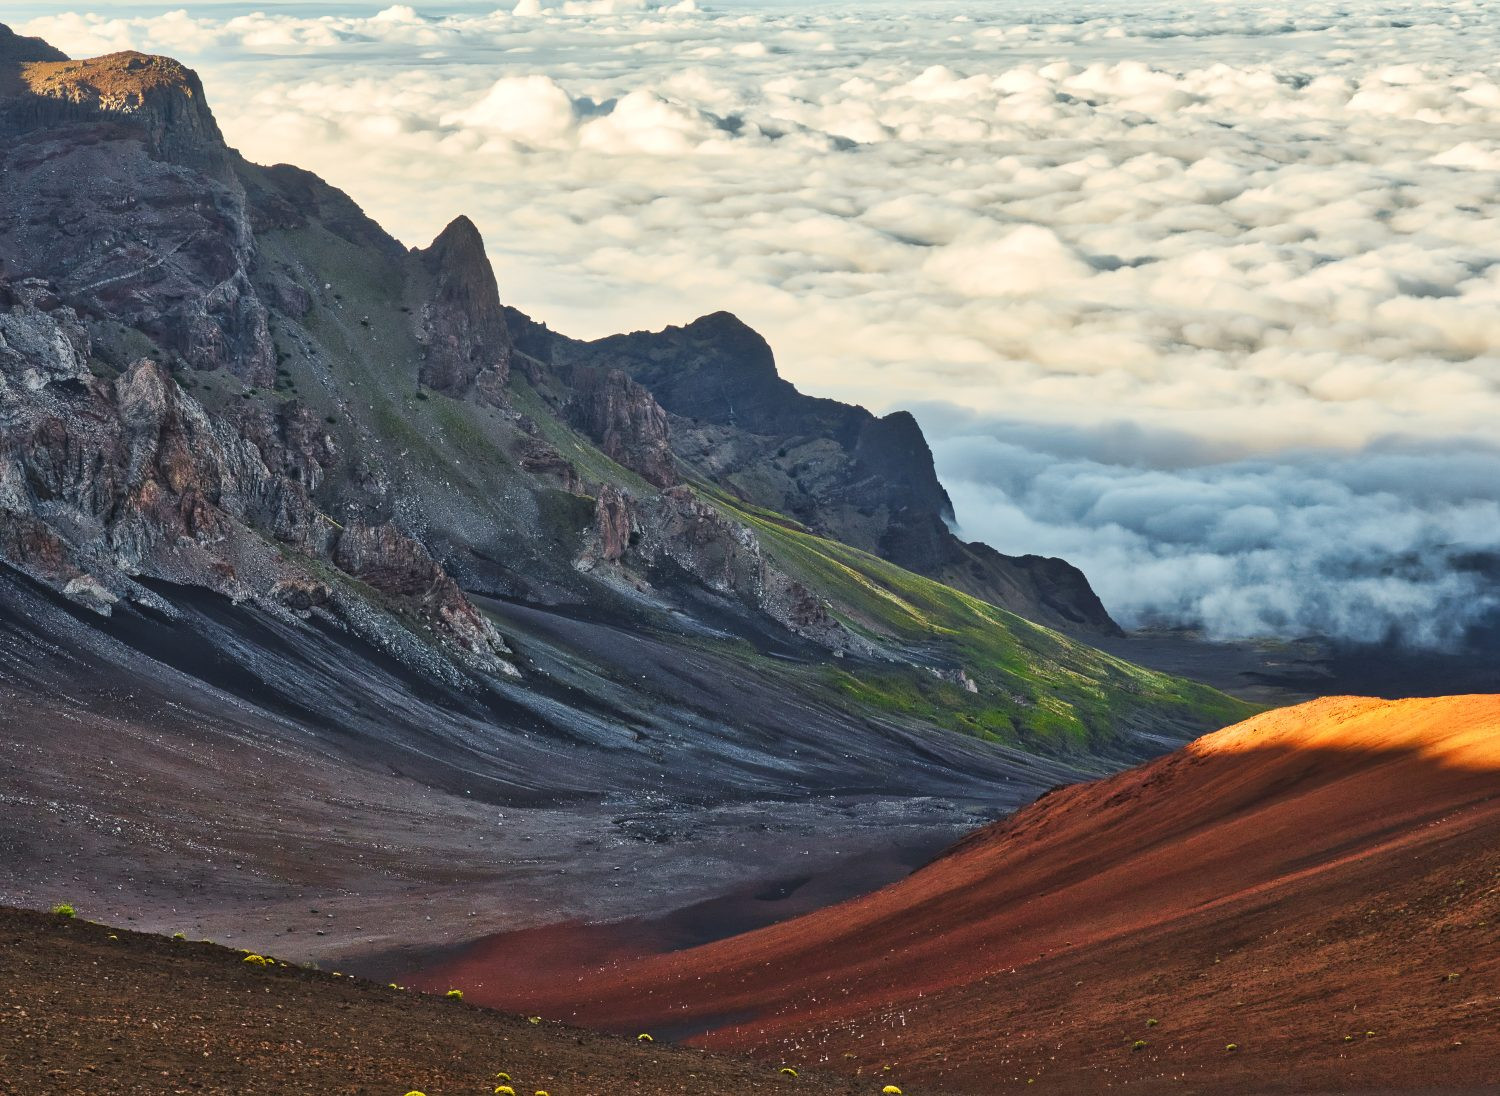 Haleakala Volcano